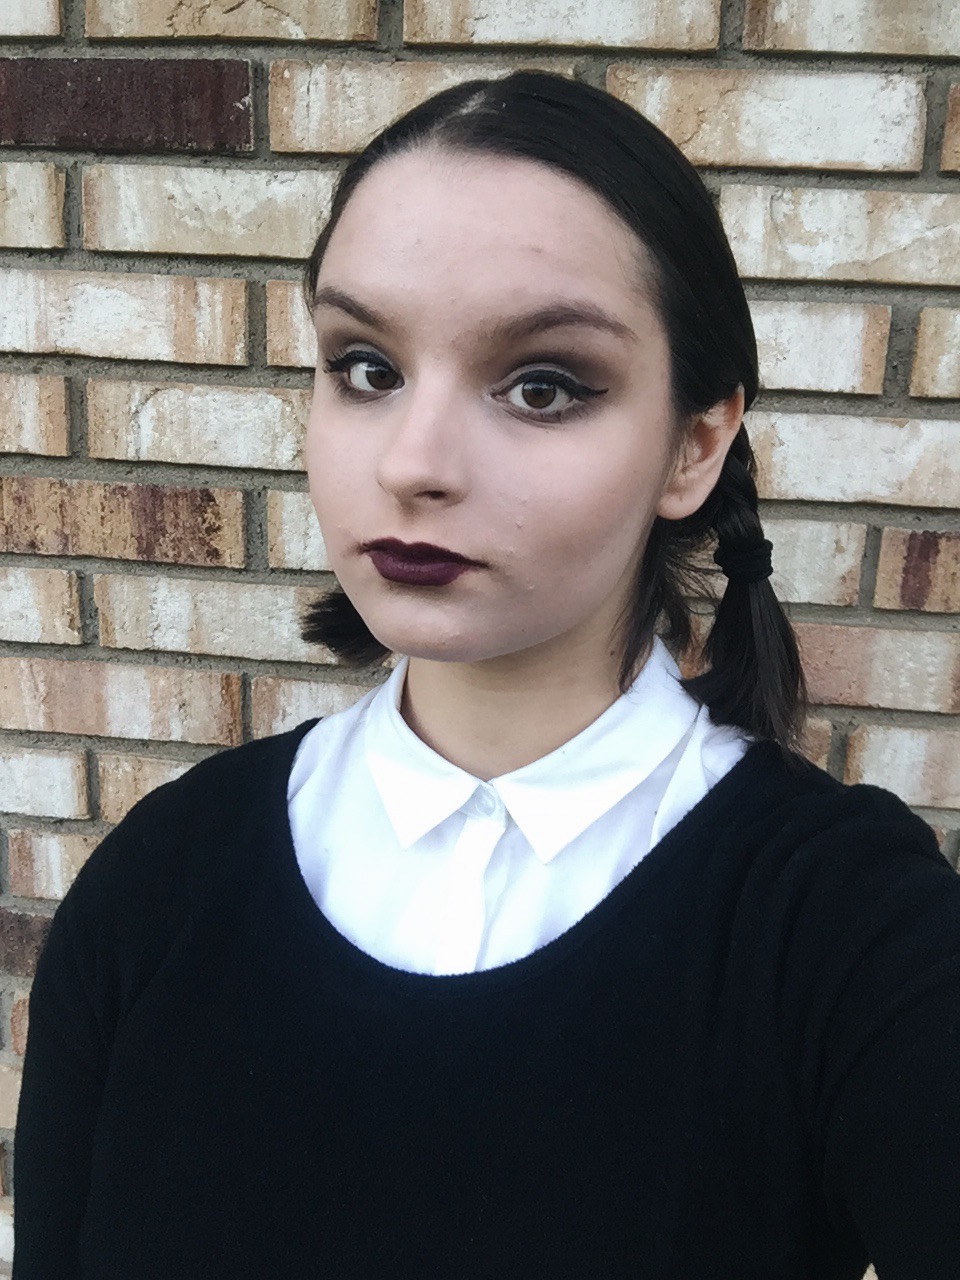 Wednesday Addams DIY Costume + Makeup | Skylar Elizabeth